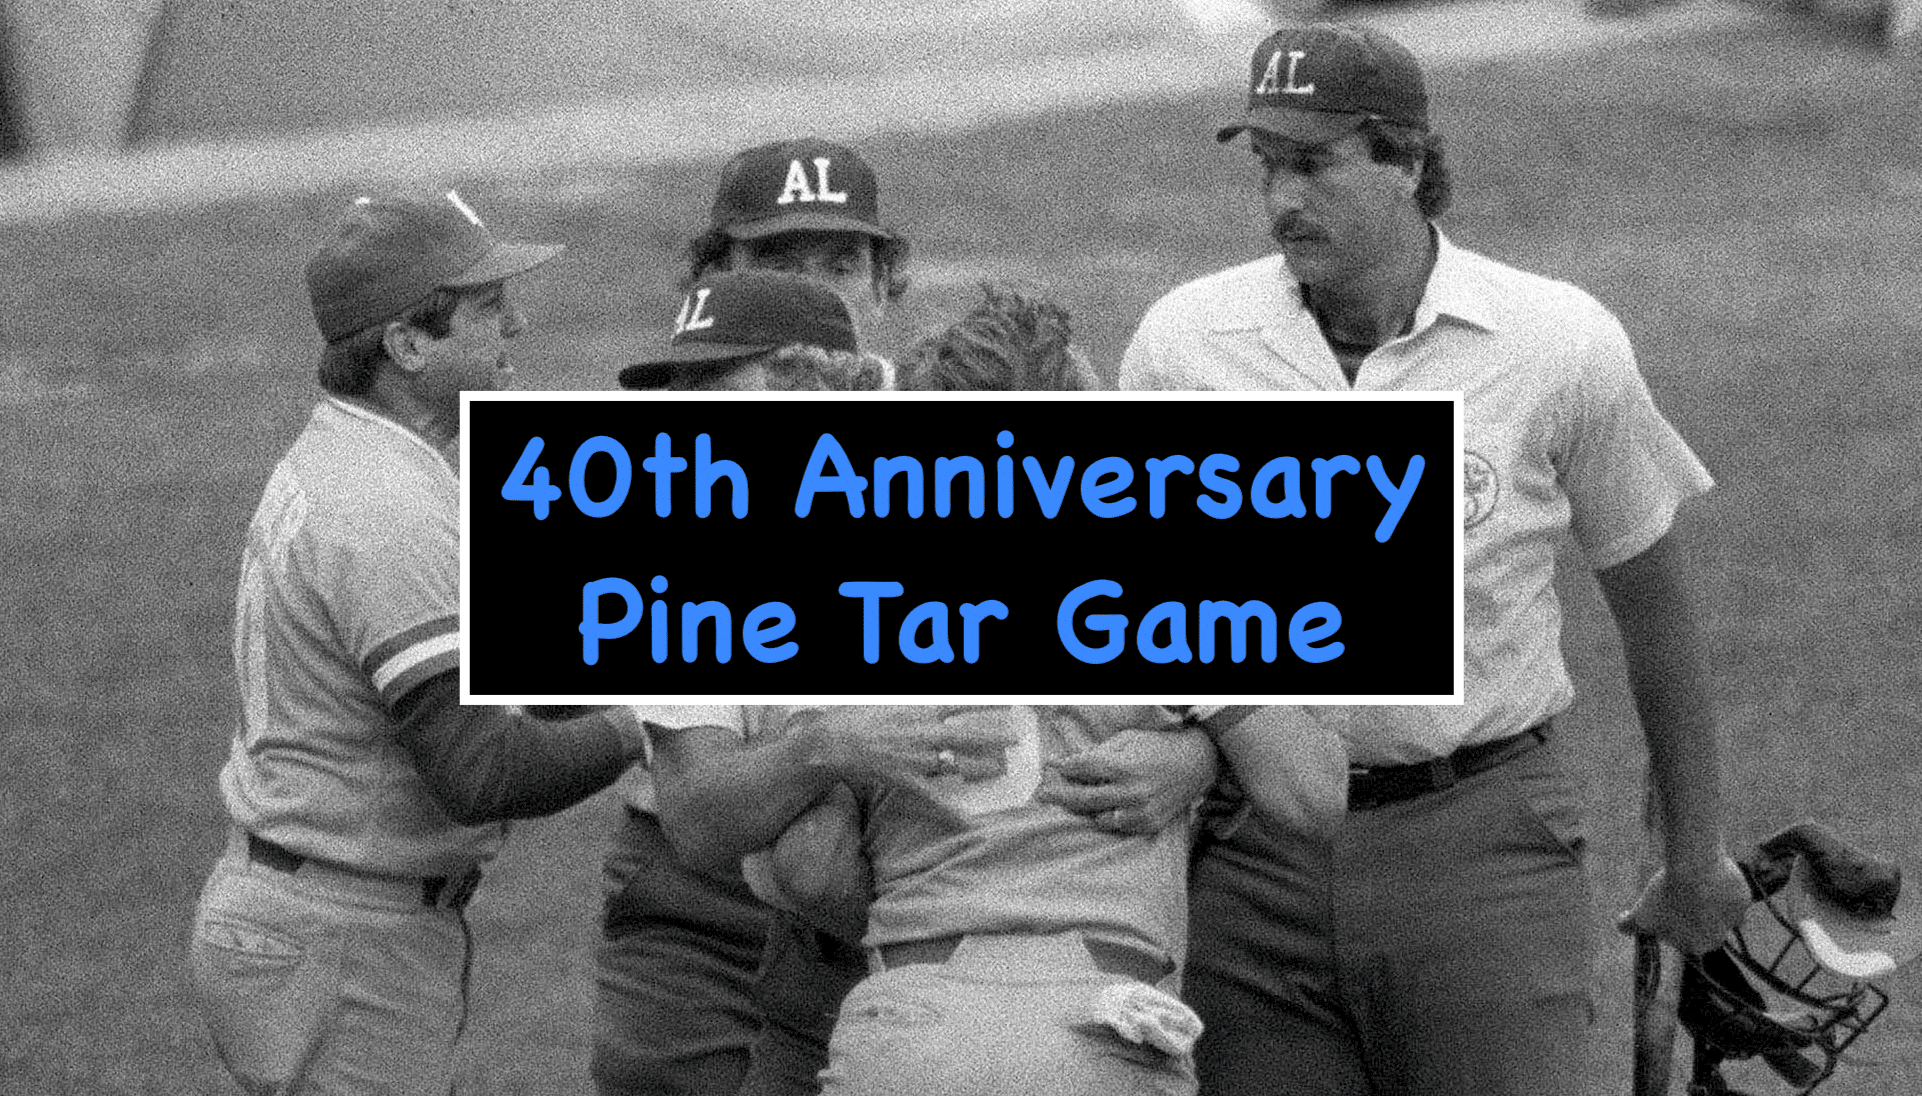 The History of Pine Tar in Baseball